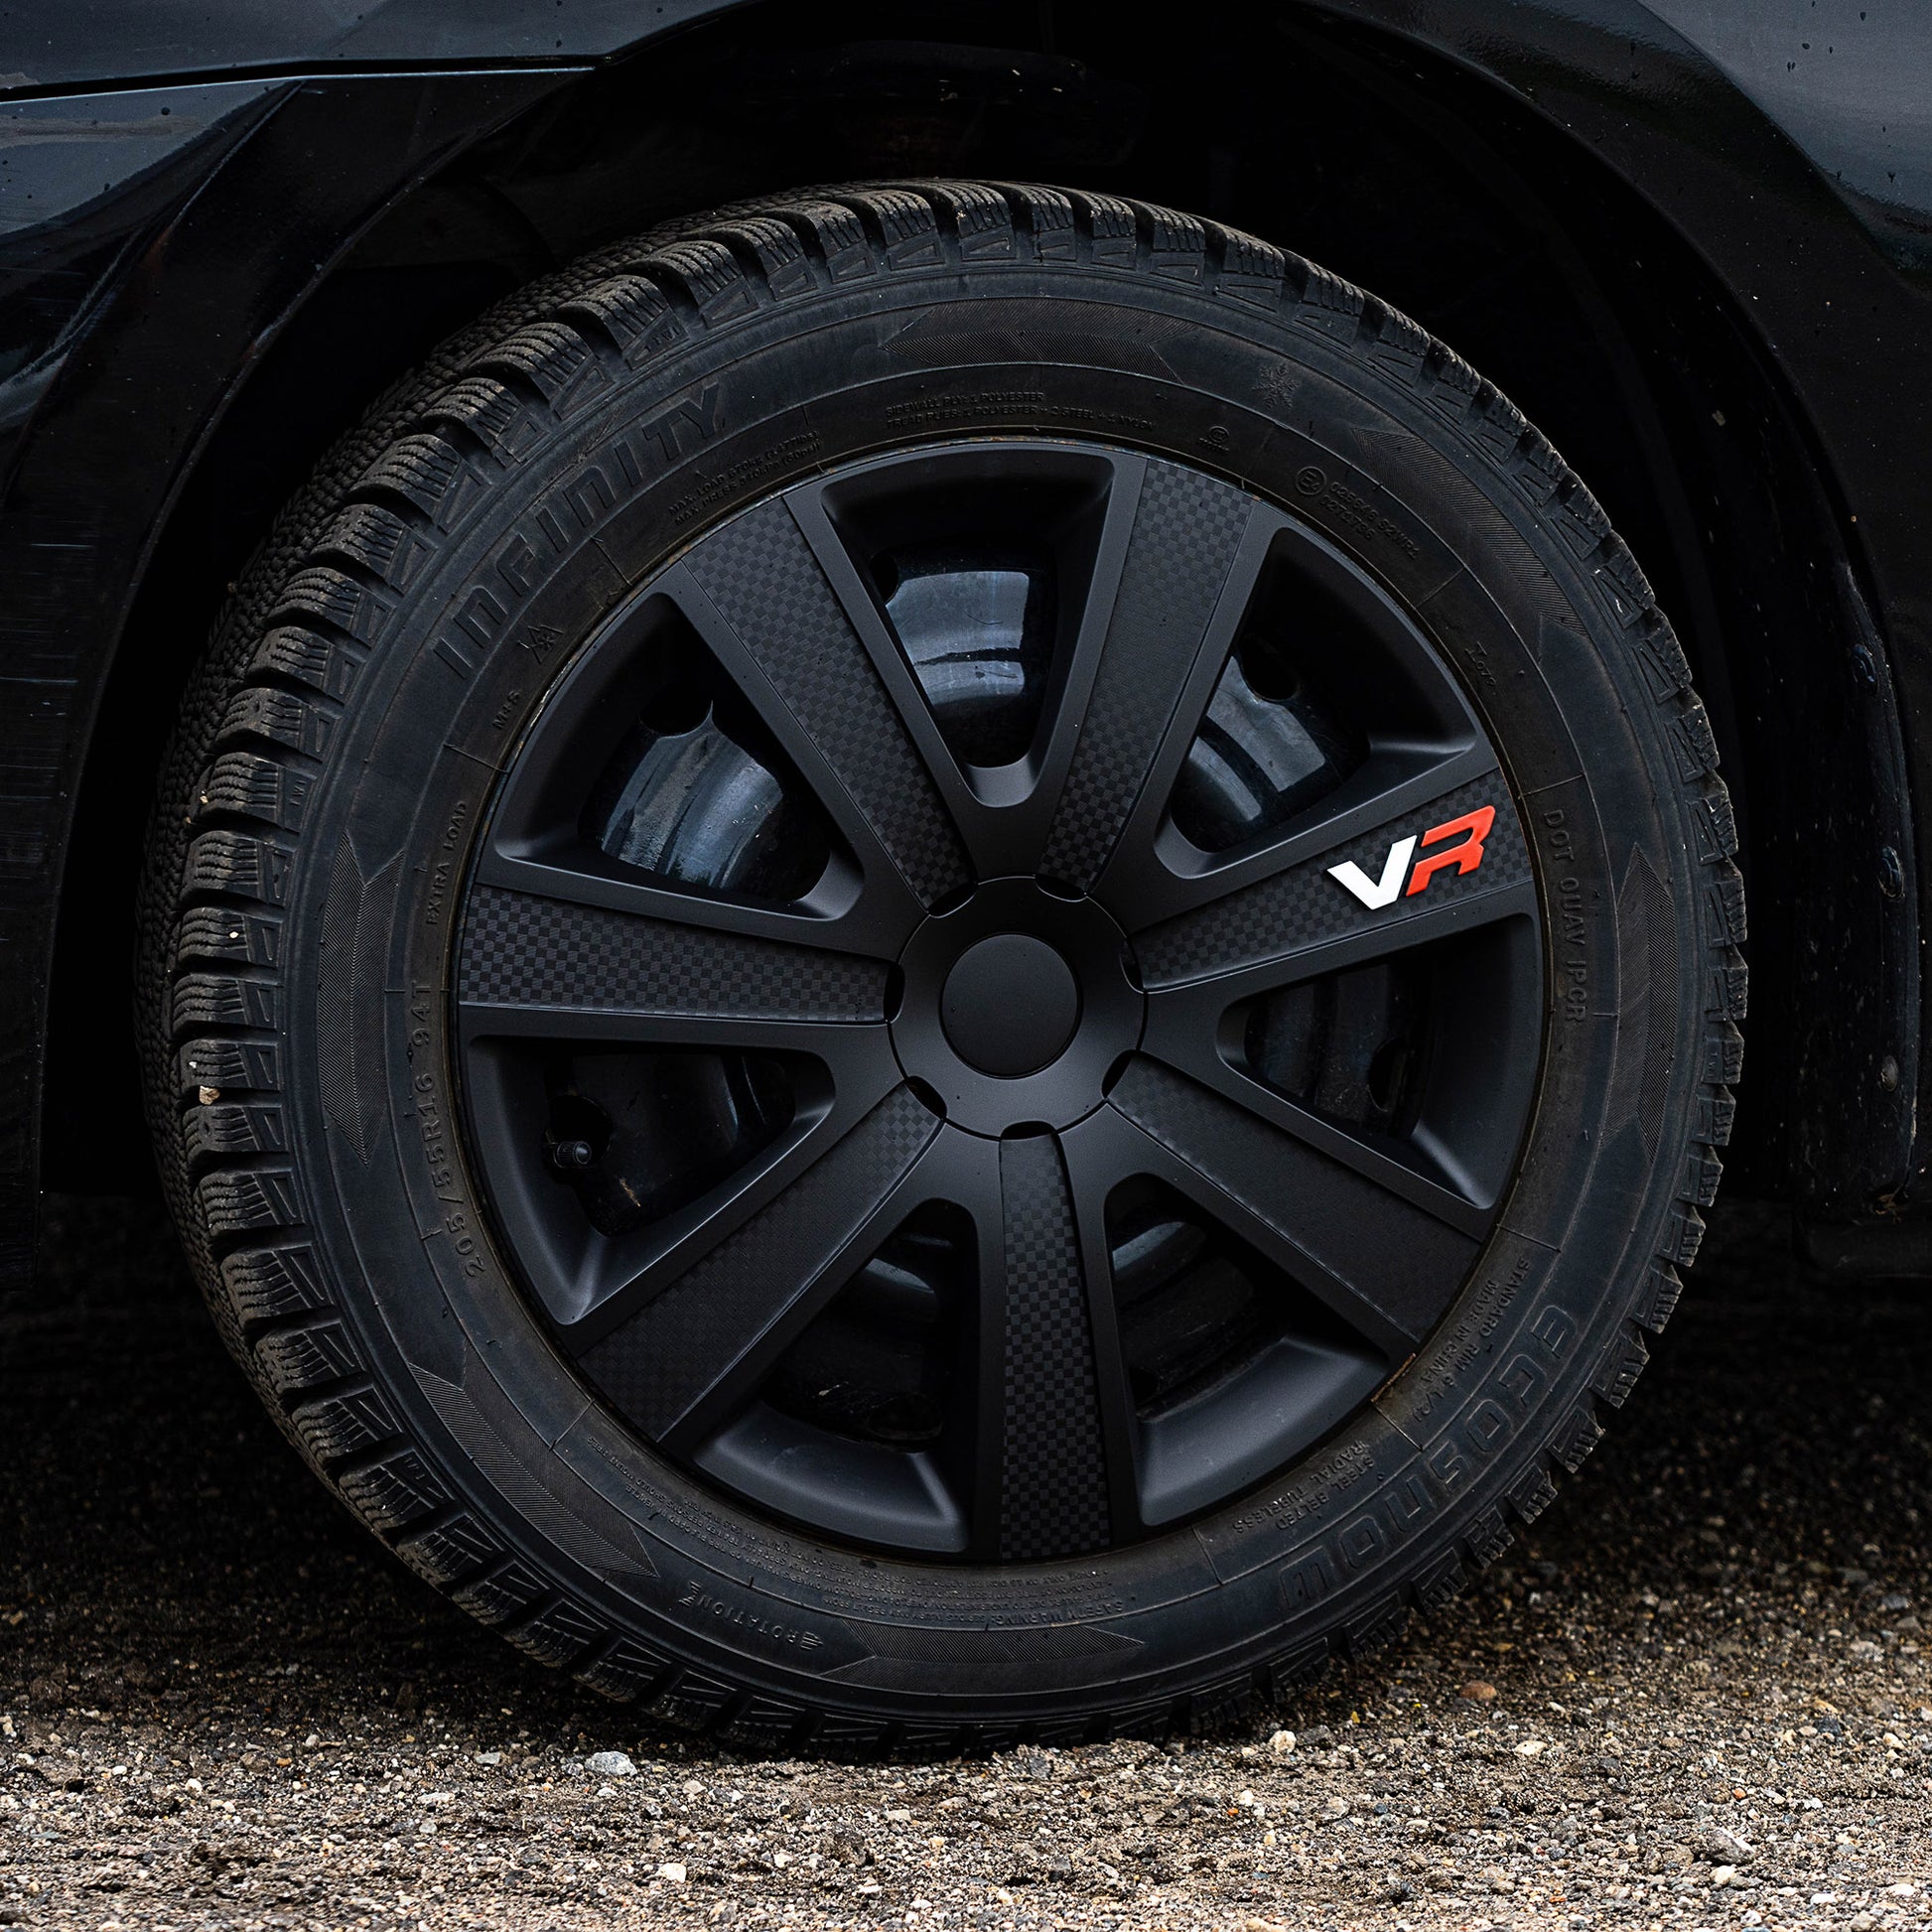 Alpena 17 inch VR Carbon Wheel Covers, Black , Set of 4, Model 58410, Fits Most Steel Wheels